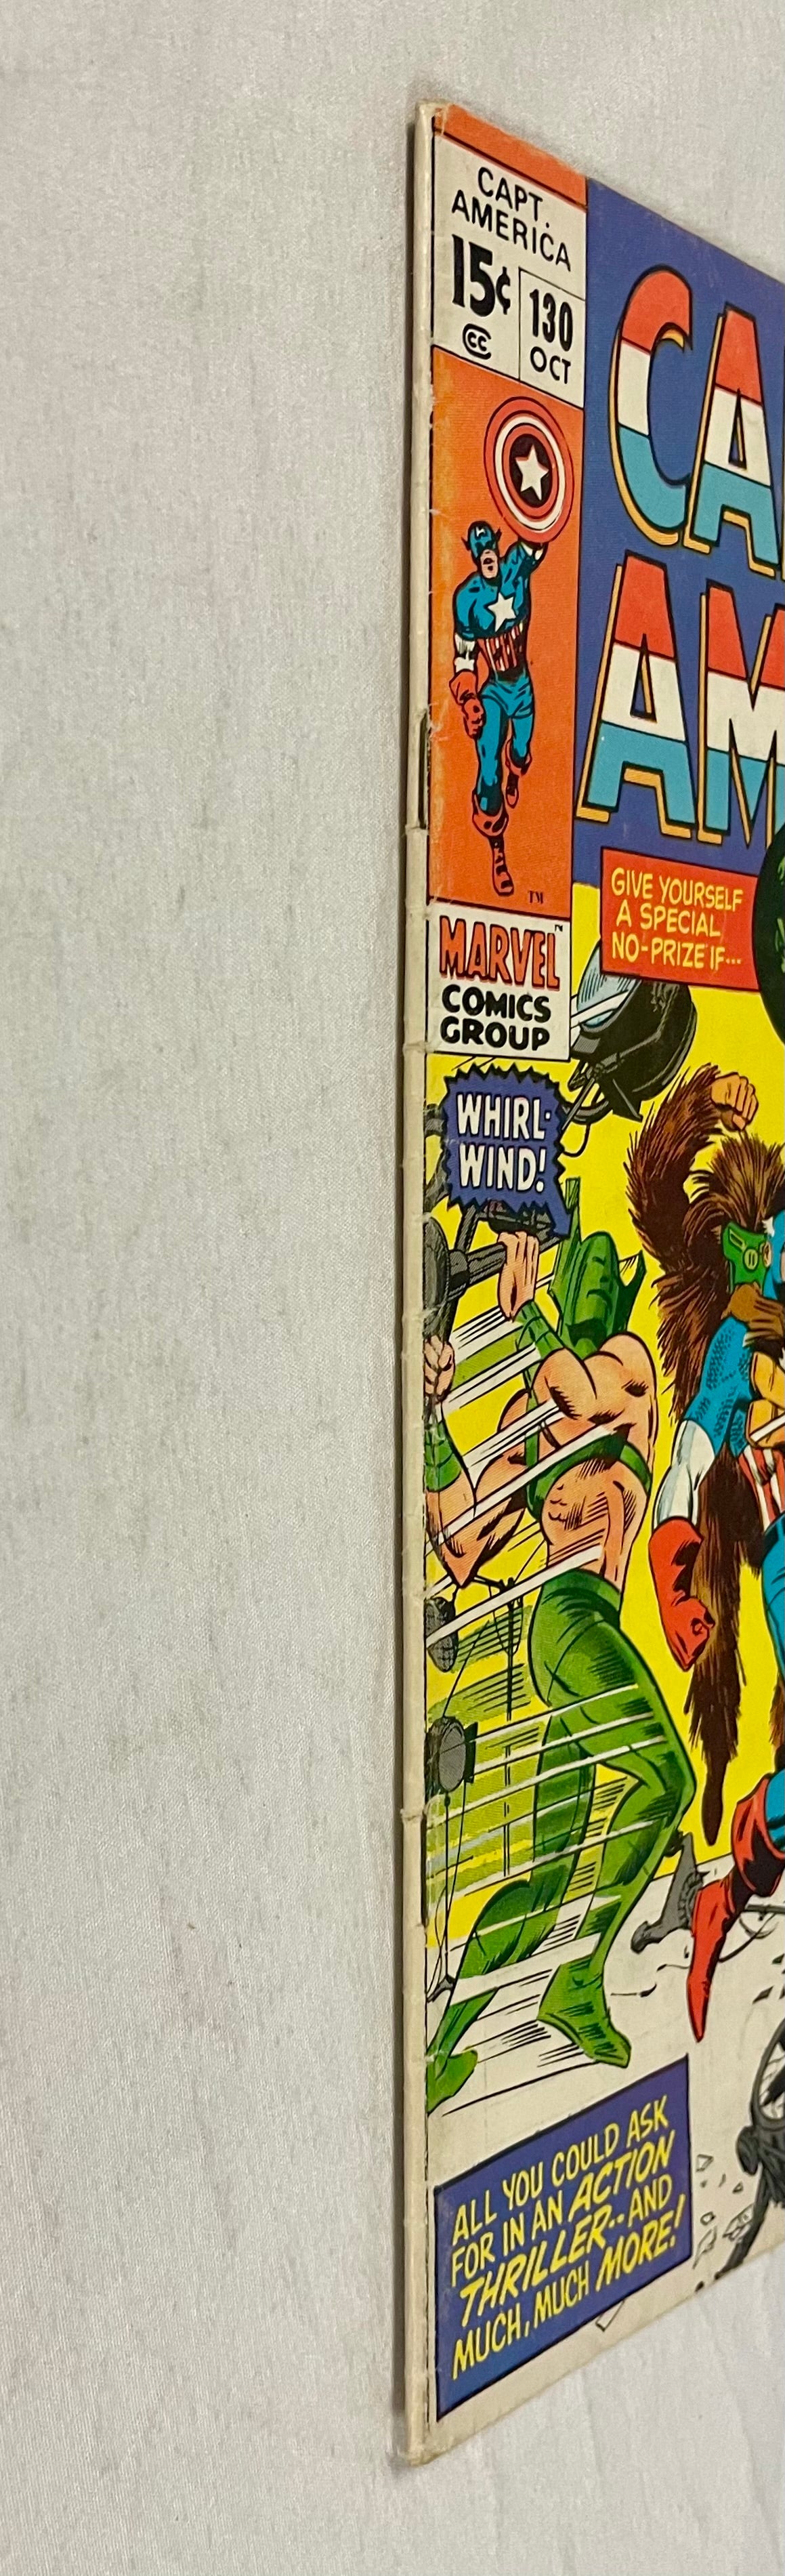 Marvel Comics: Captain America #130